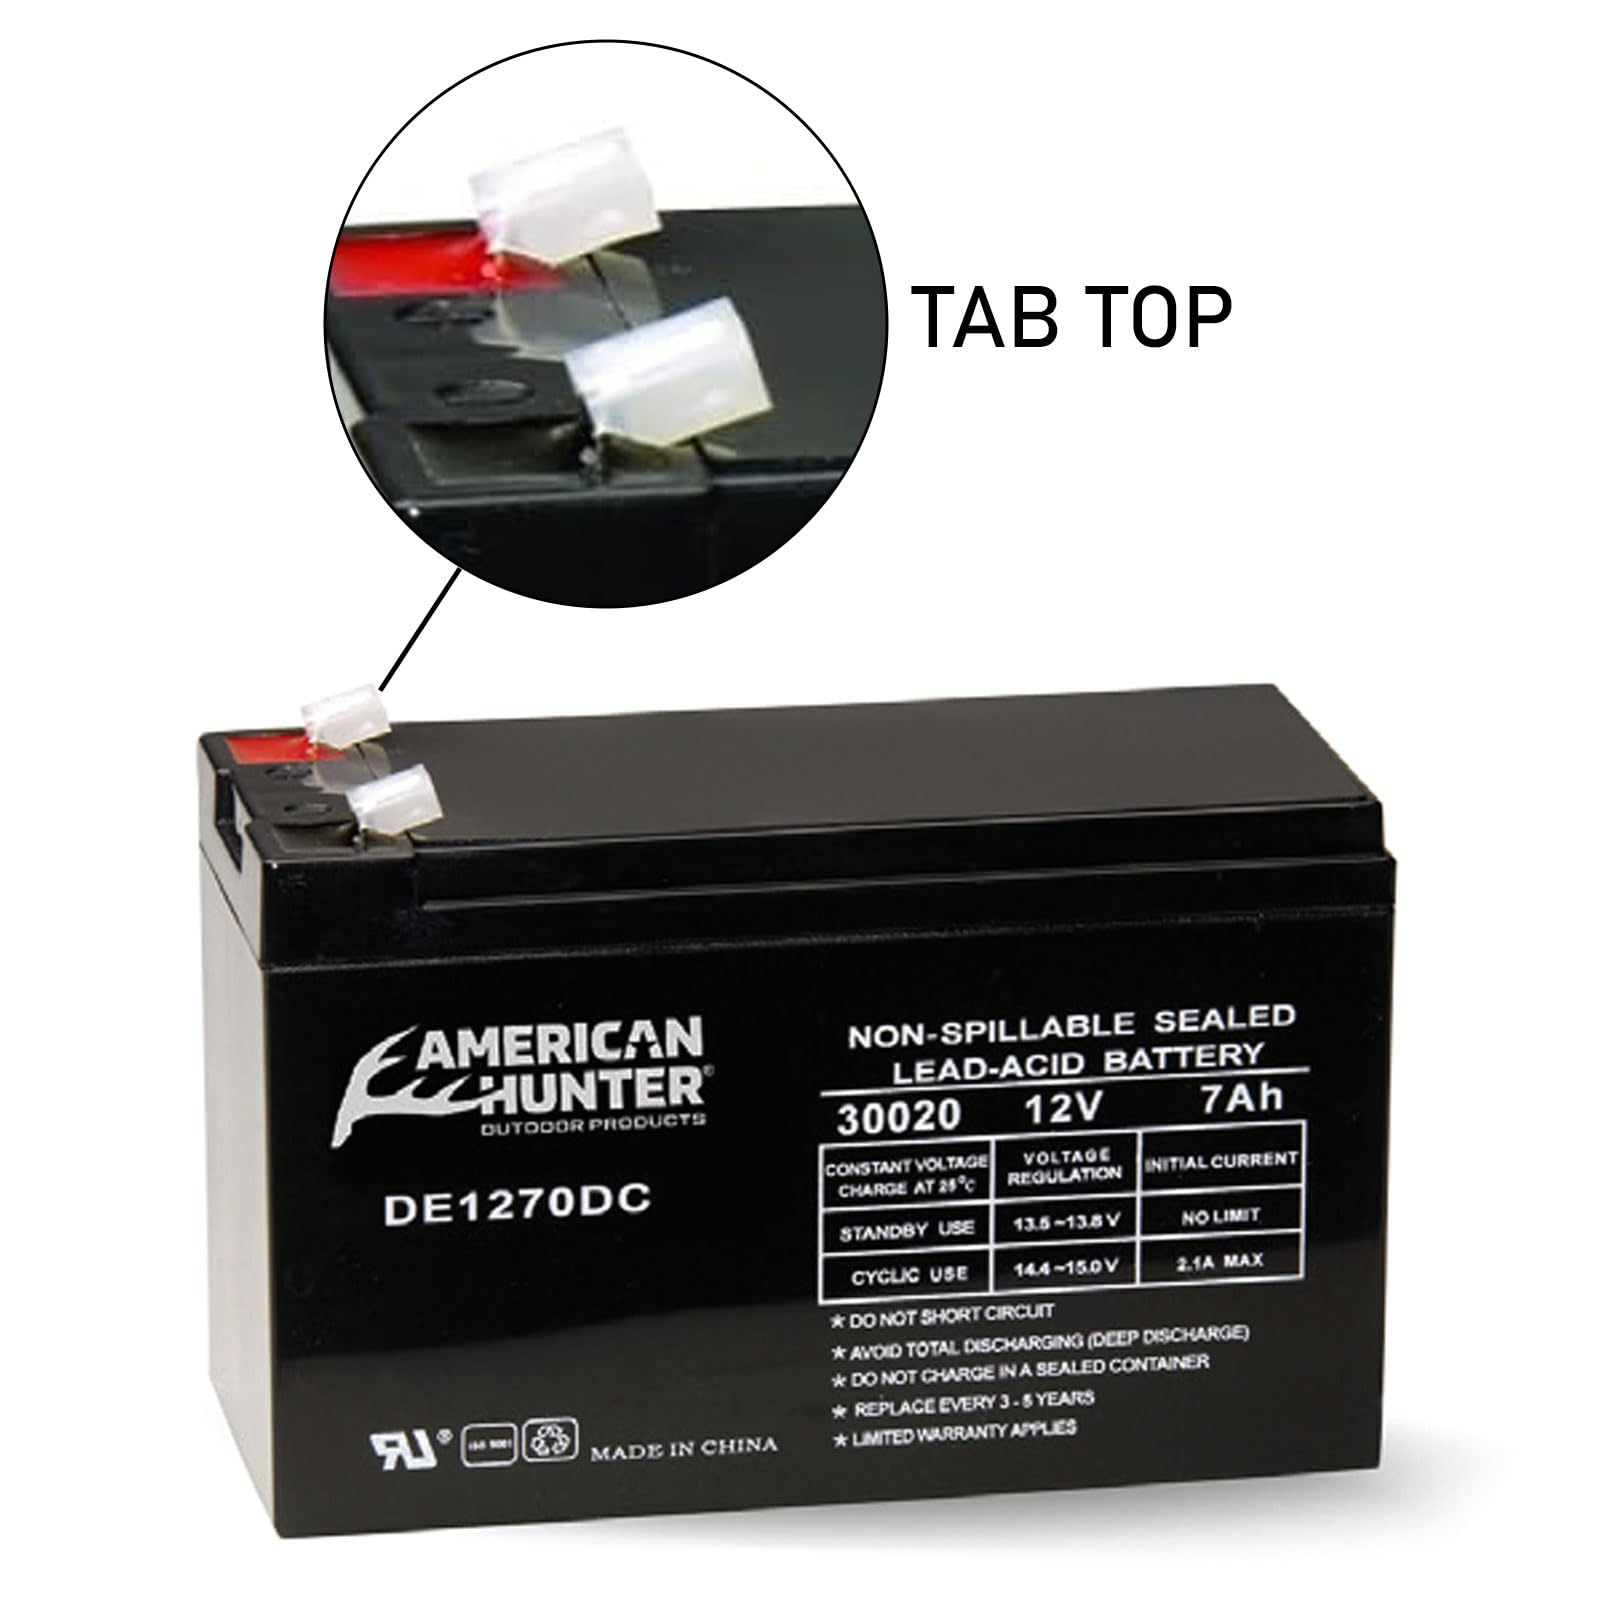 AMERICAN HUNTER 12V 7 AMP HR Universal Versatile Durable Tab Top Deer Feeder Non-Spillable Sealed Lead Acid Rechargeable Battery